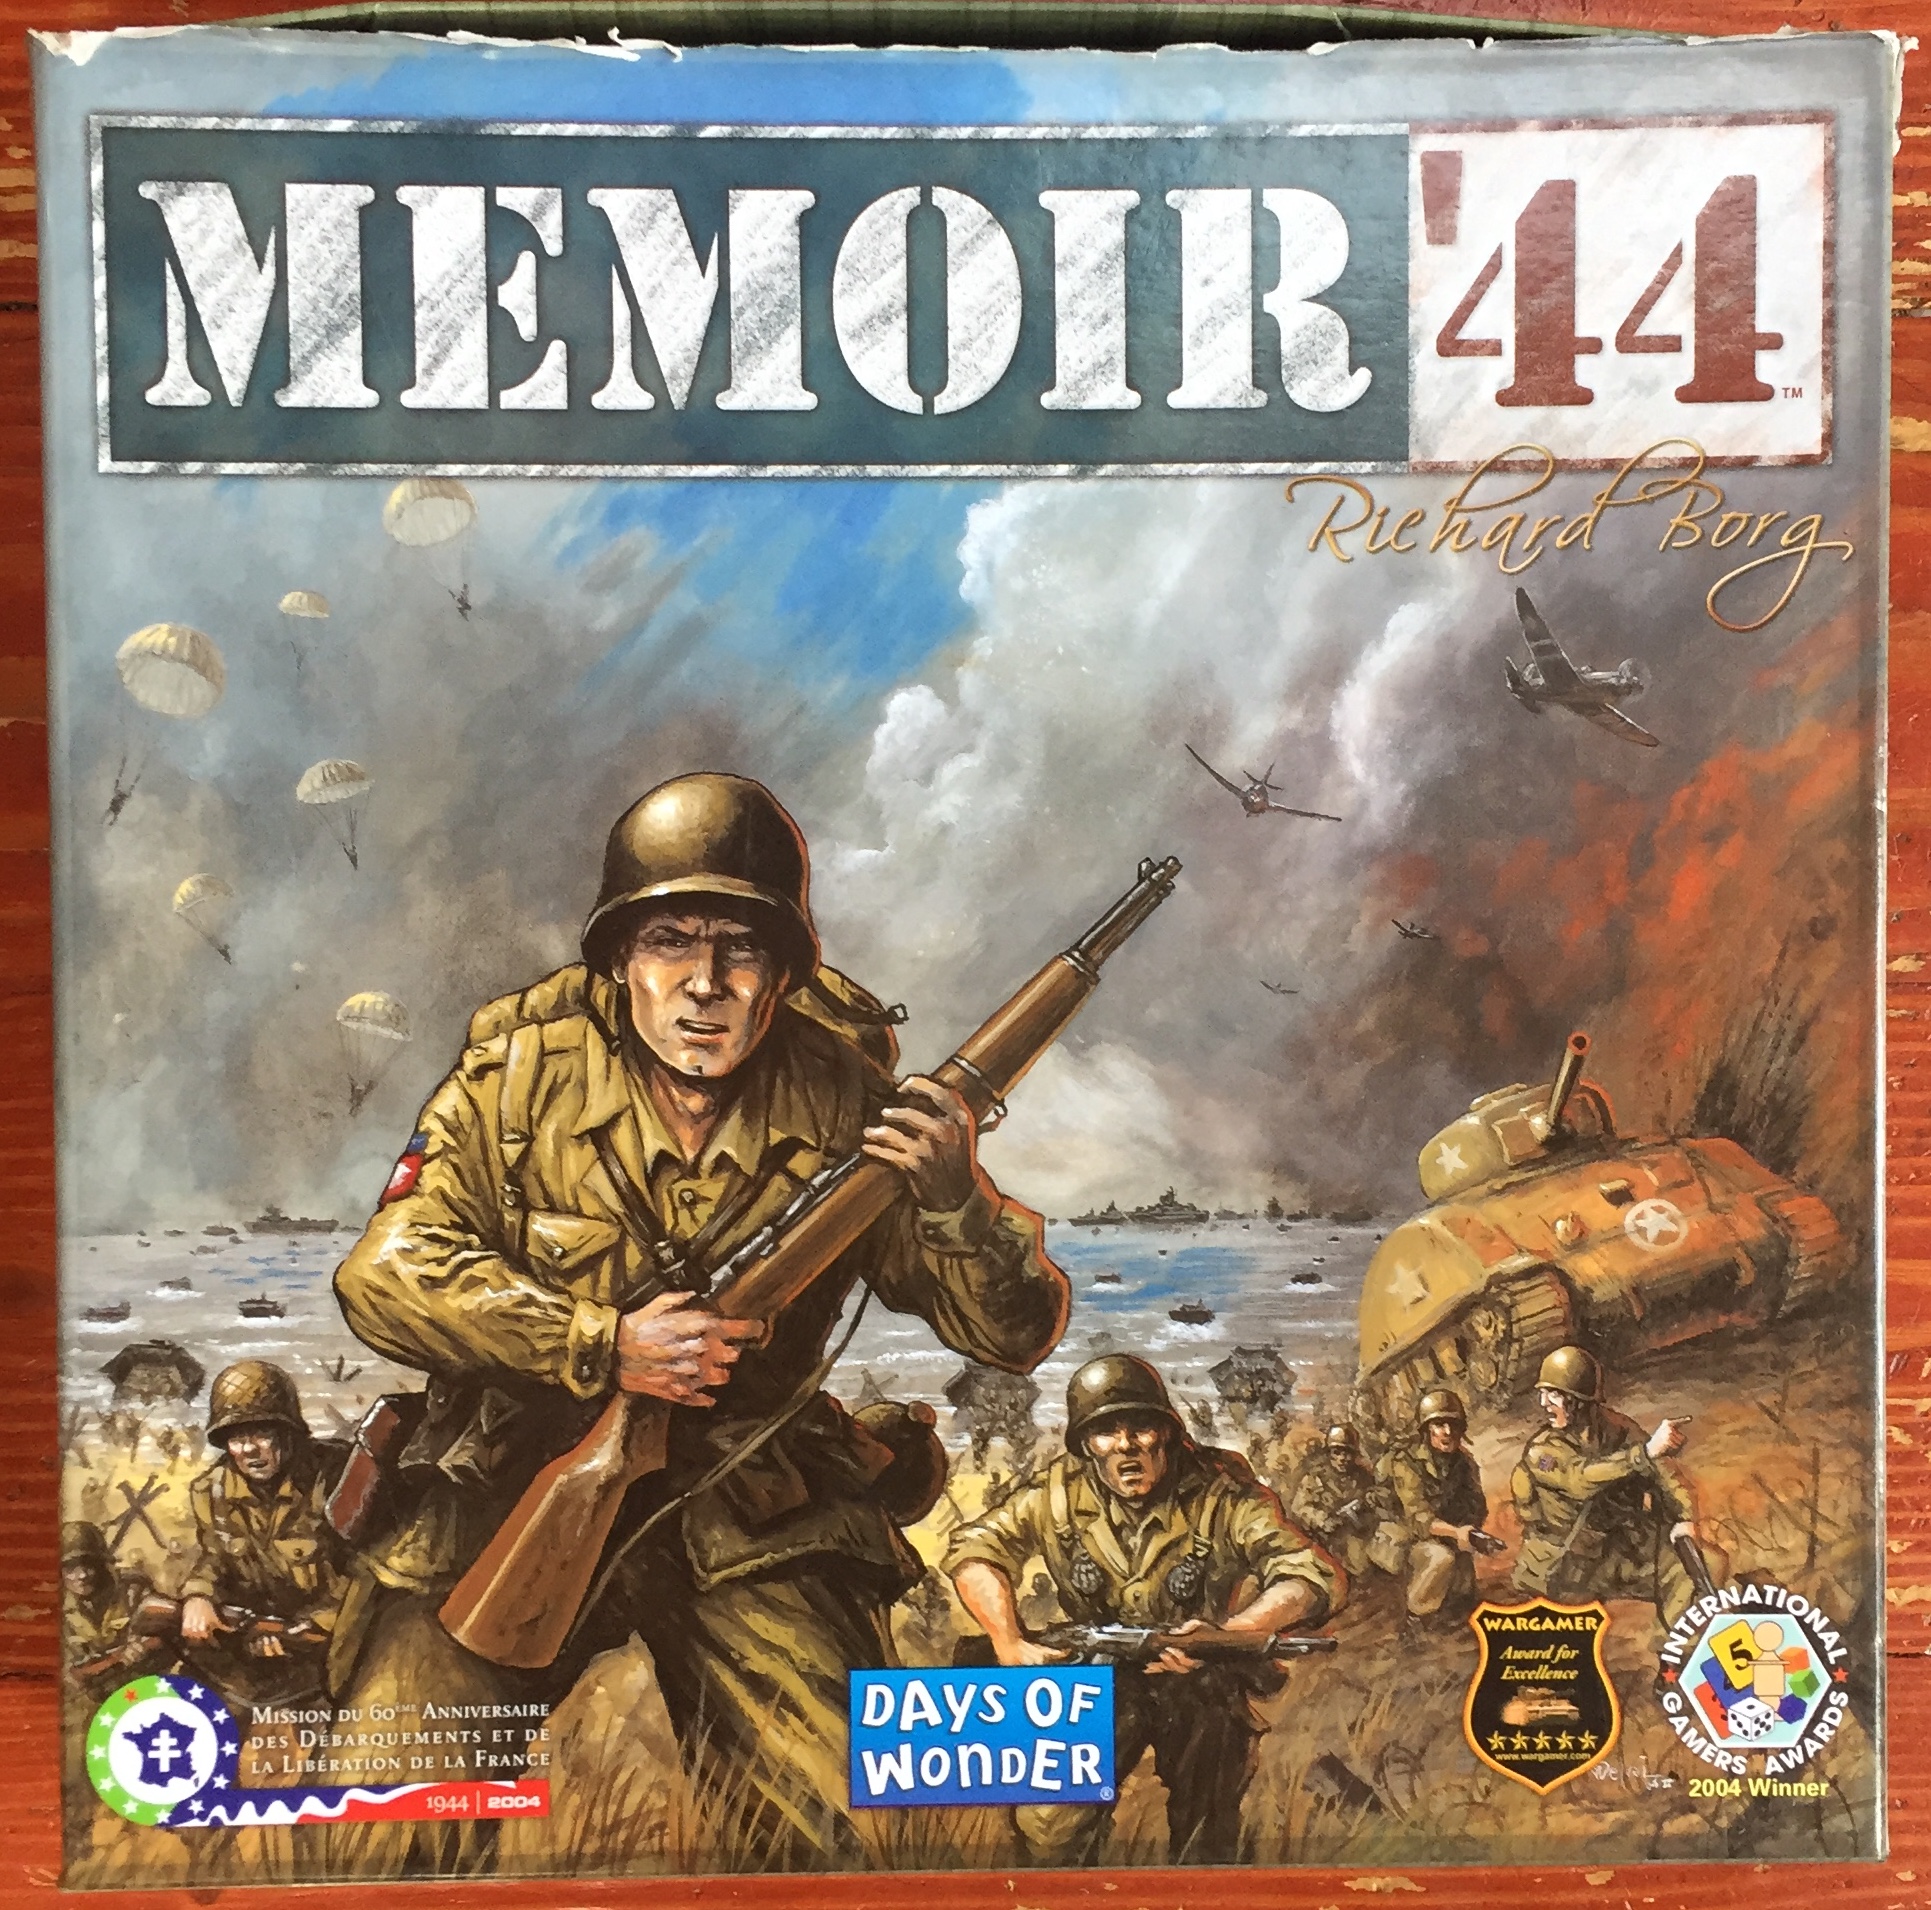 Memoir 44 board game box Word War II historical strategy game